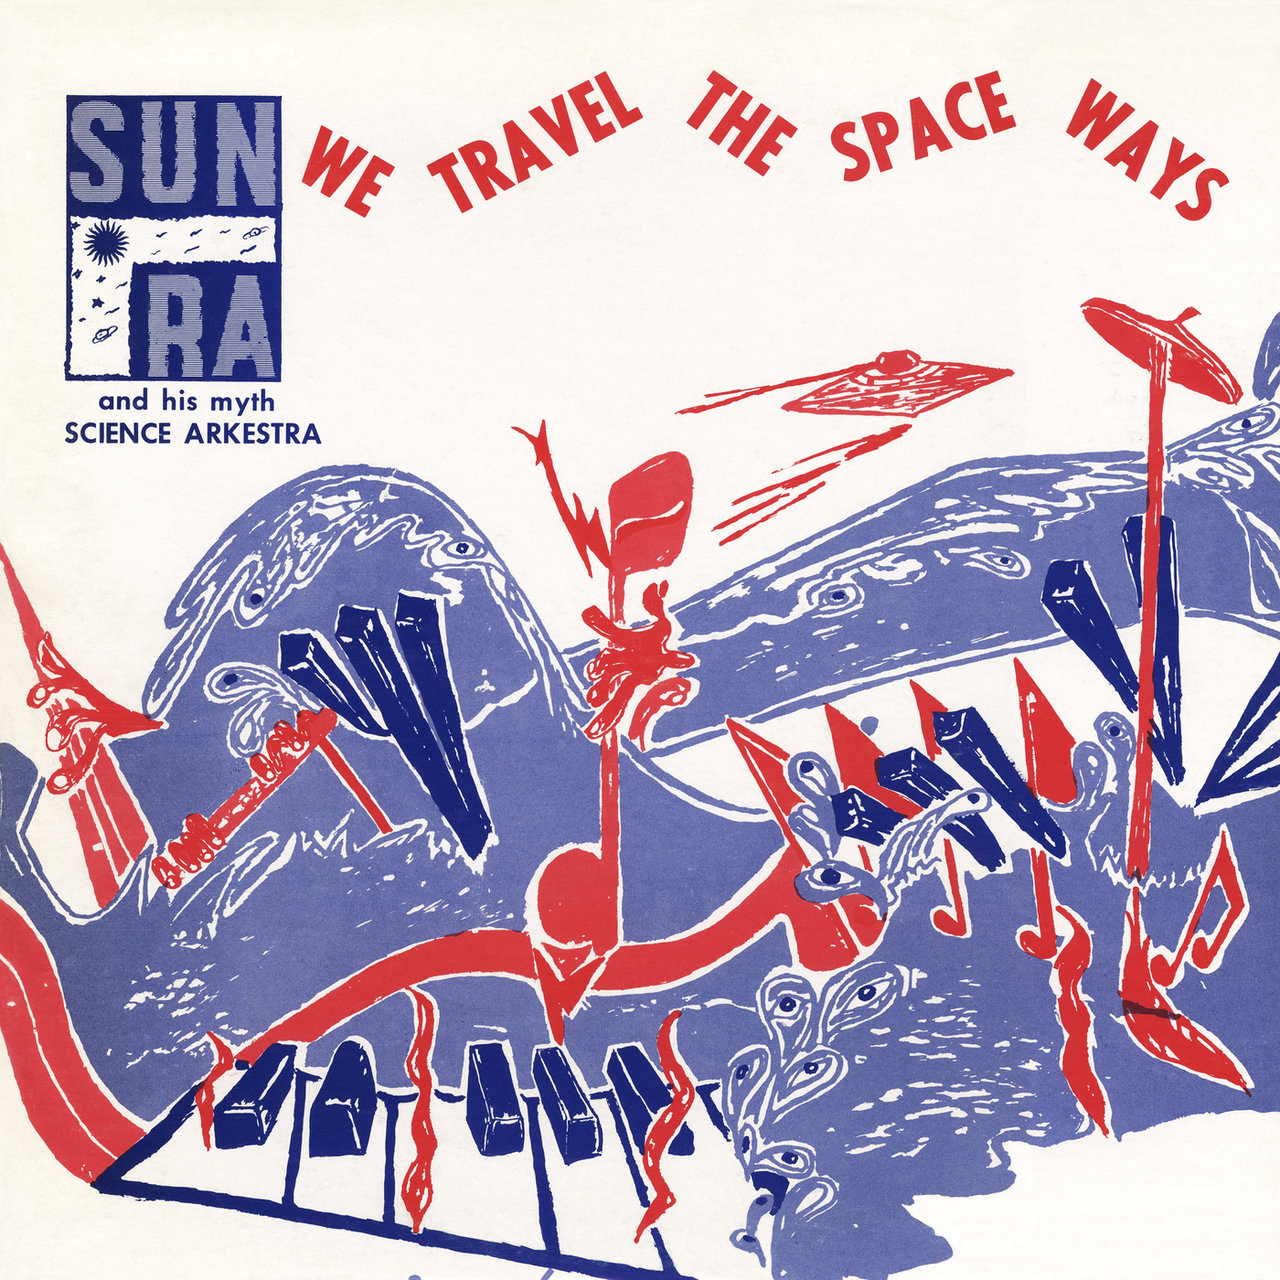 We Travel the Spaceways [1967]